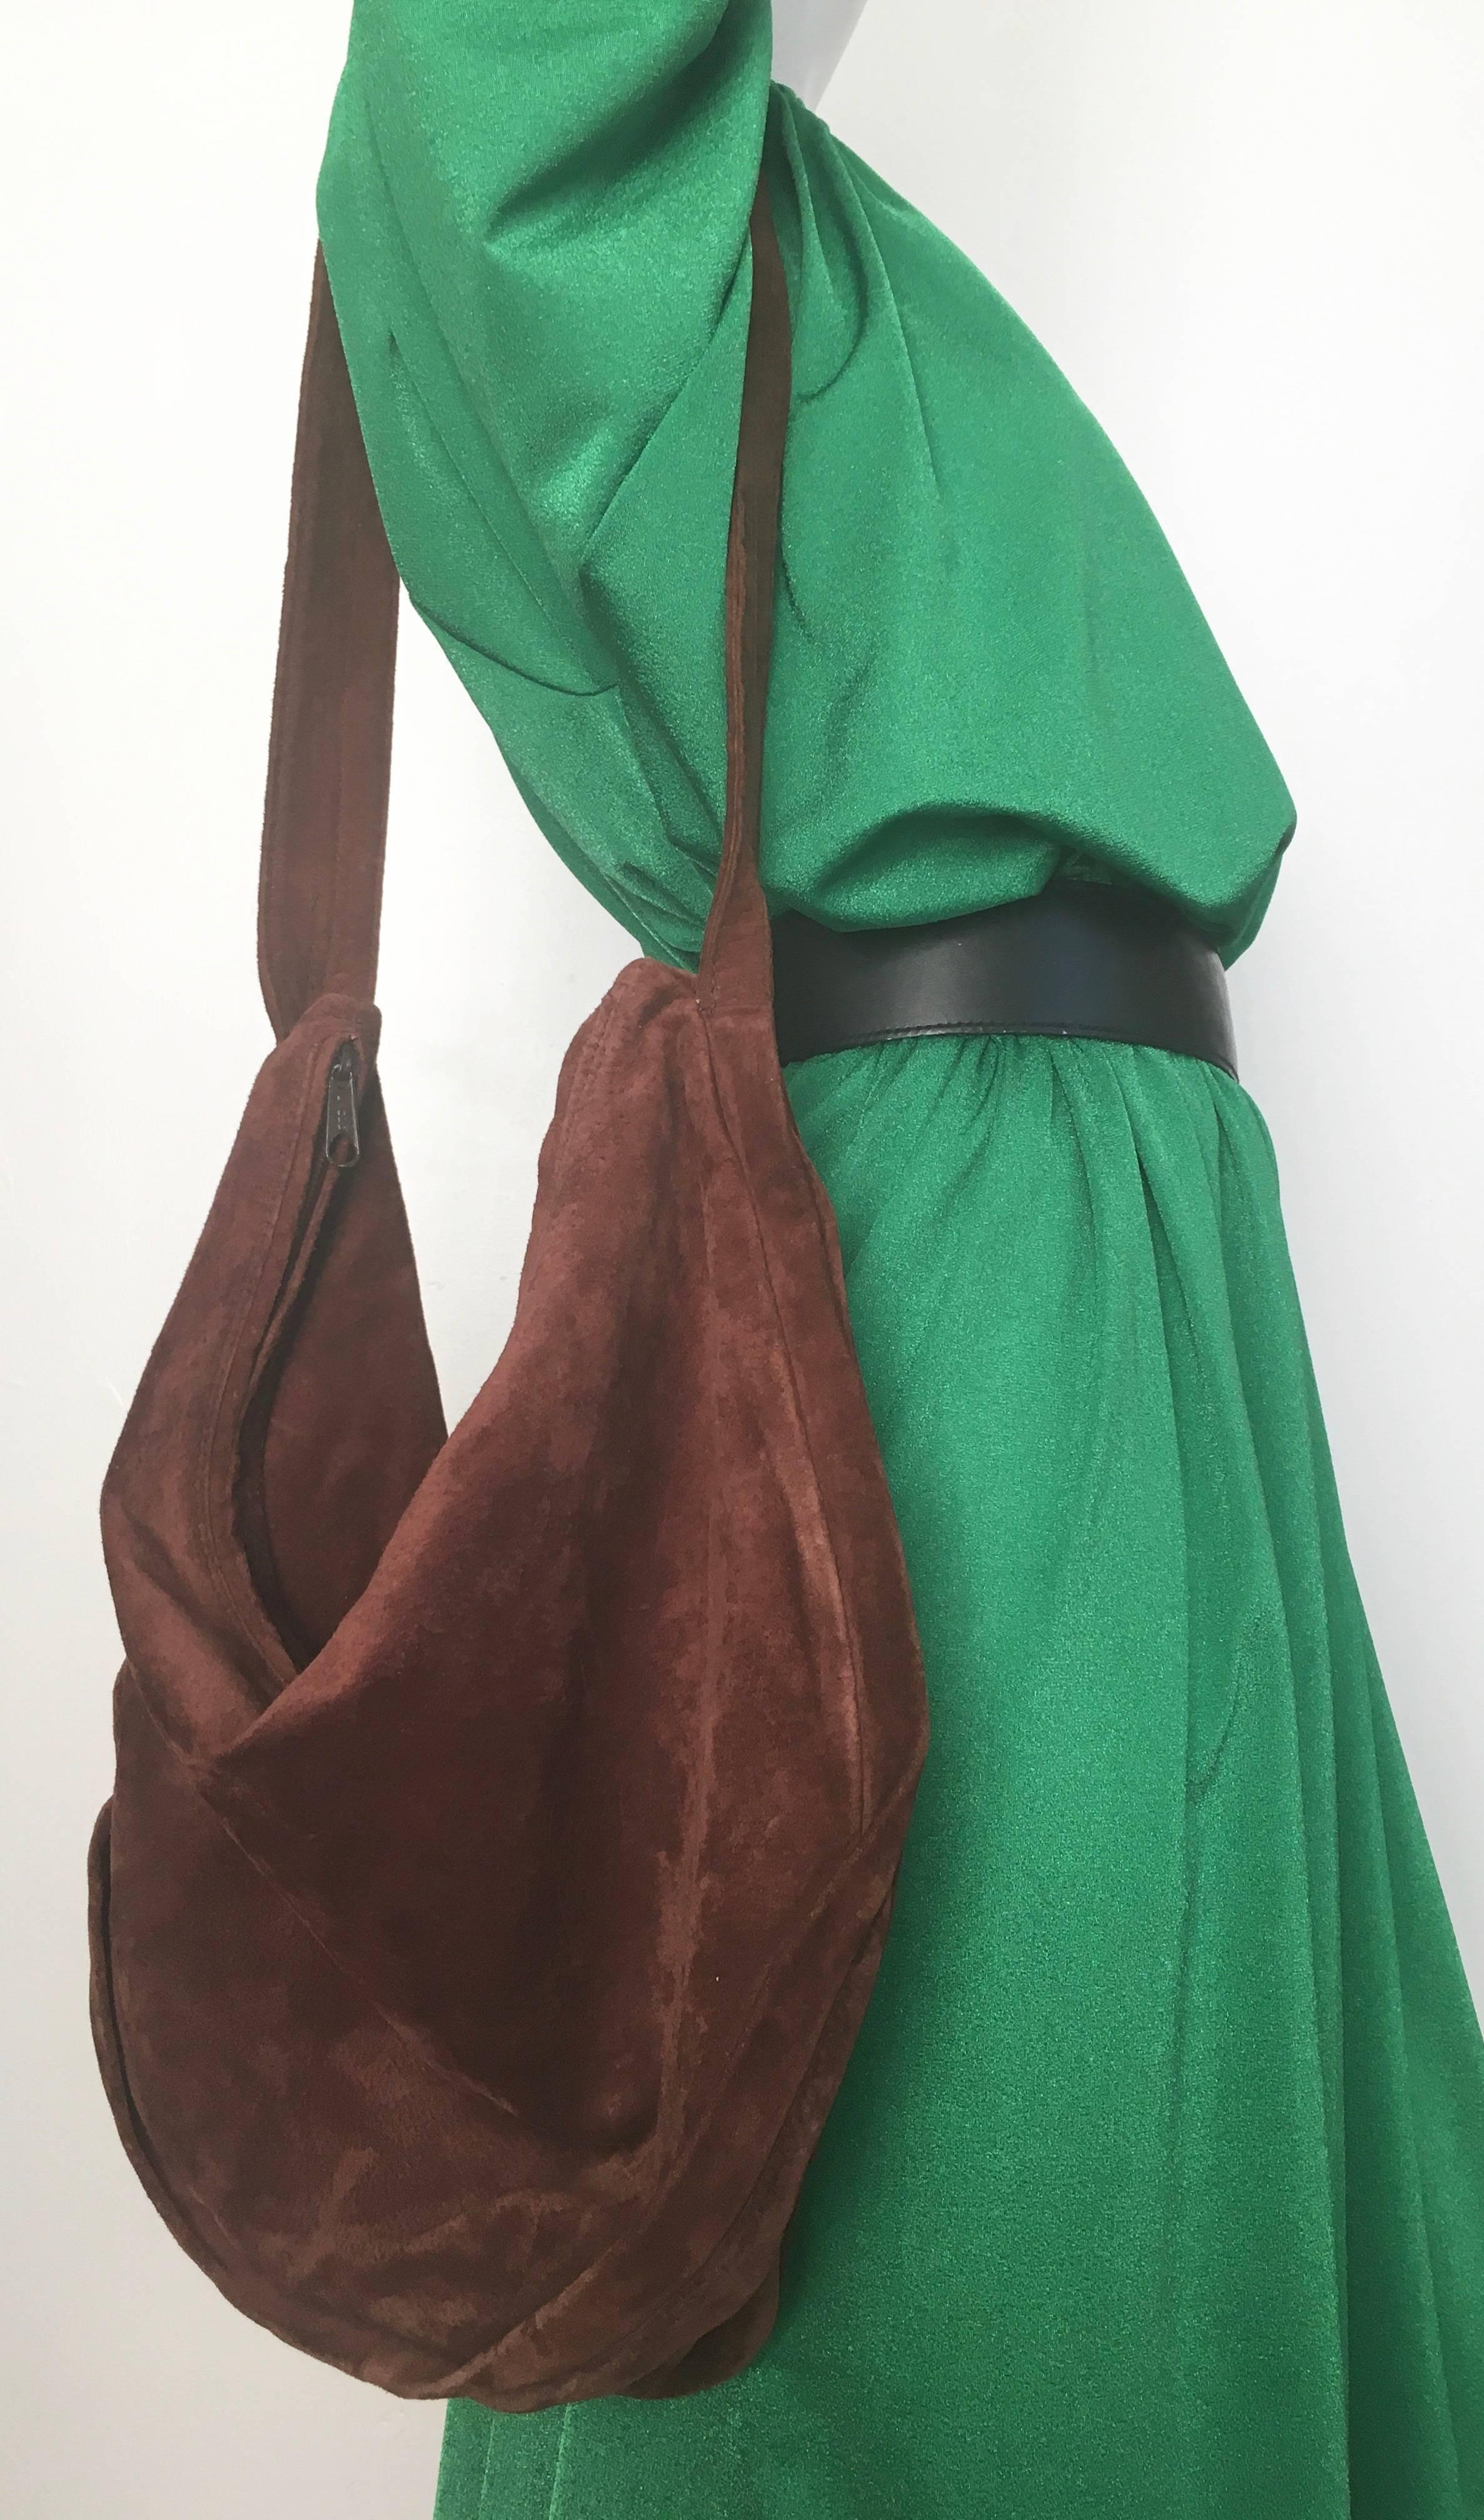 Women's or Men's Donna Karan Brown Suede Hobo Handbag. Made in Italy. Never Used.